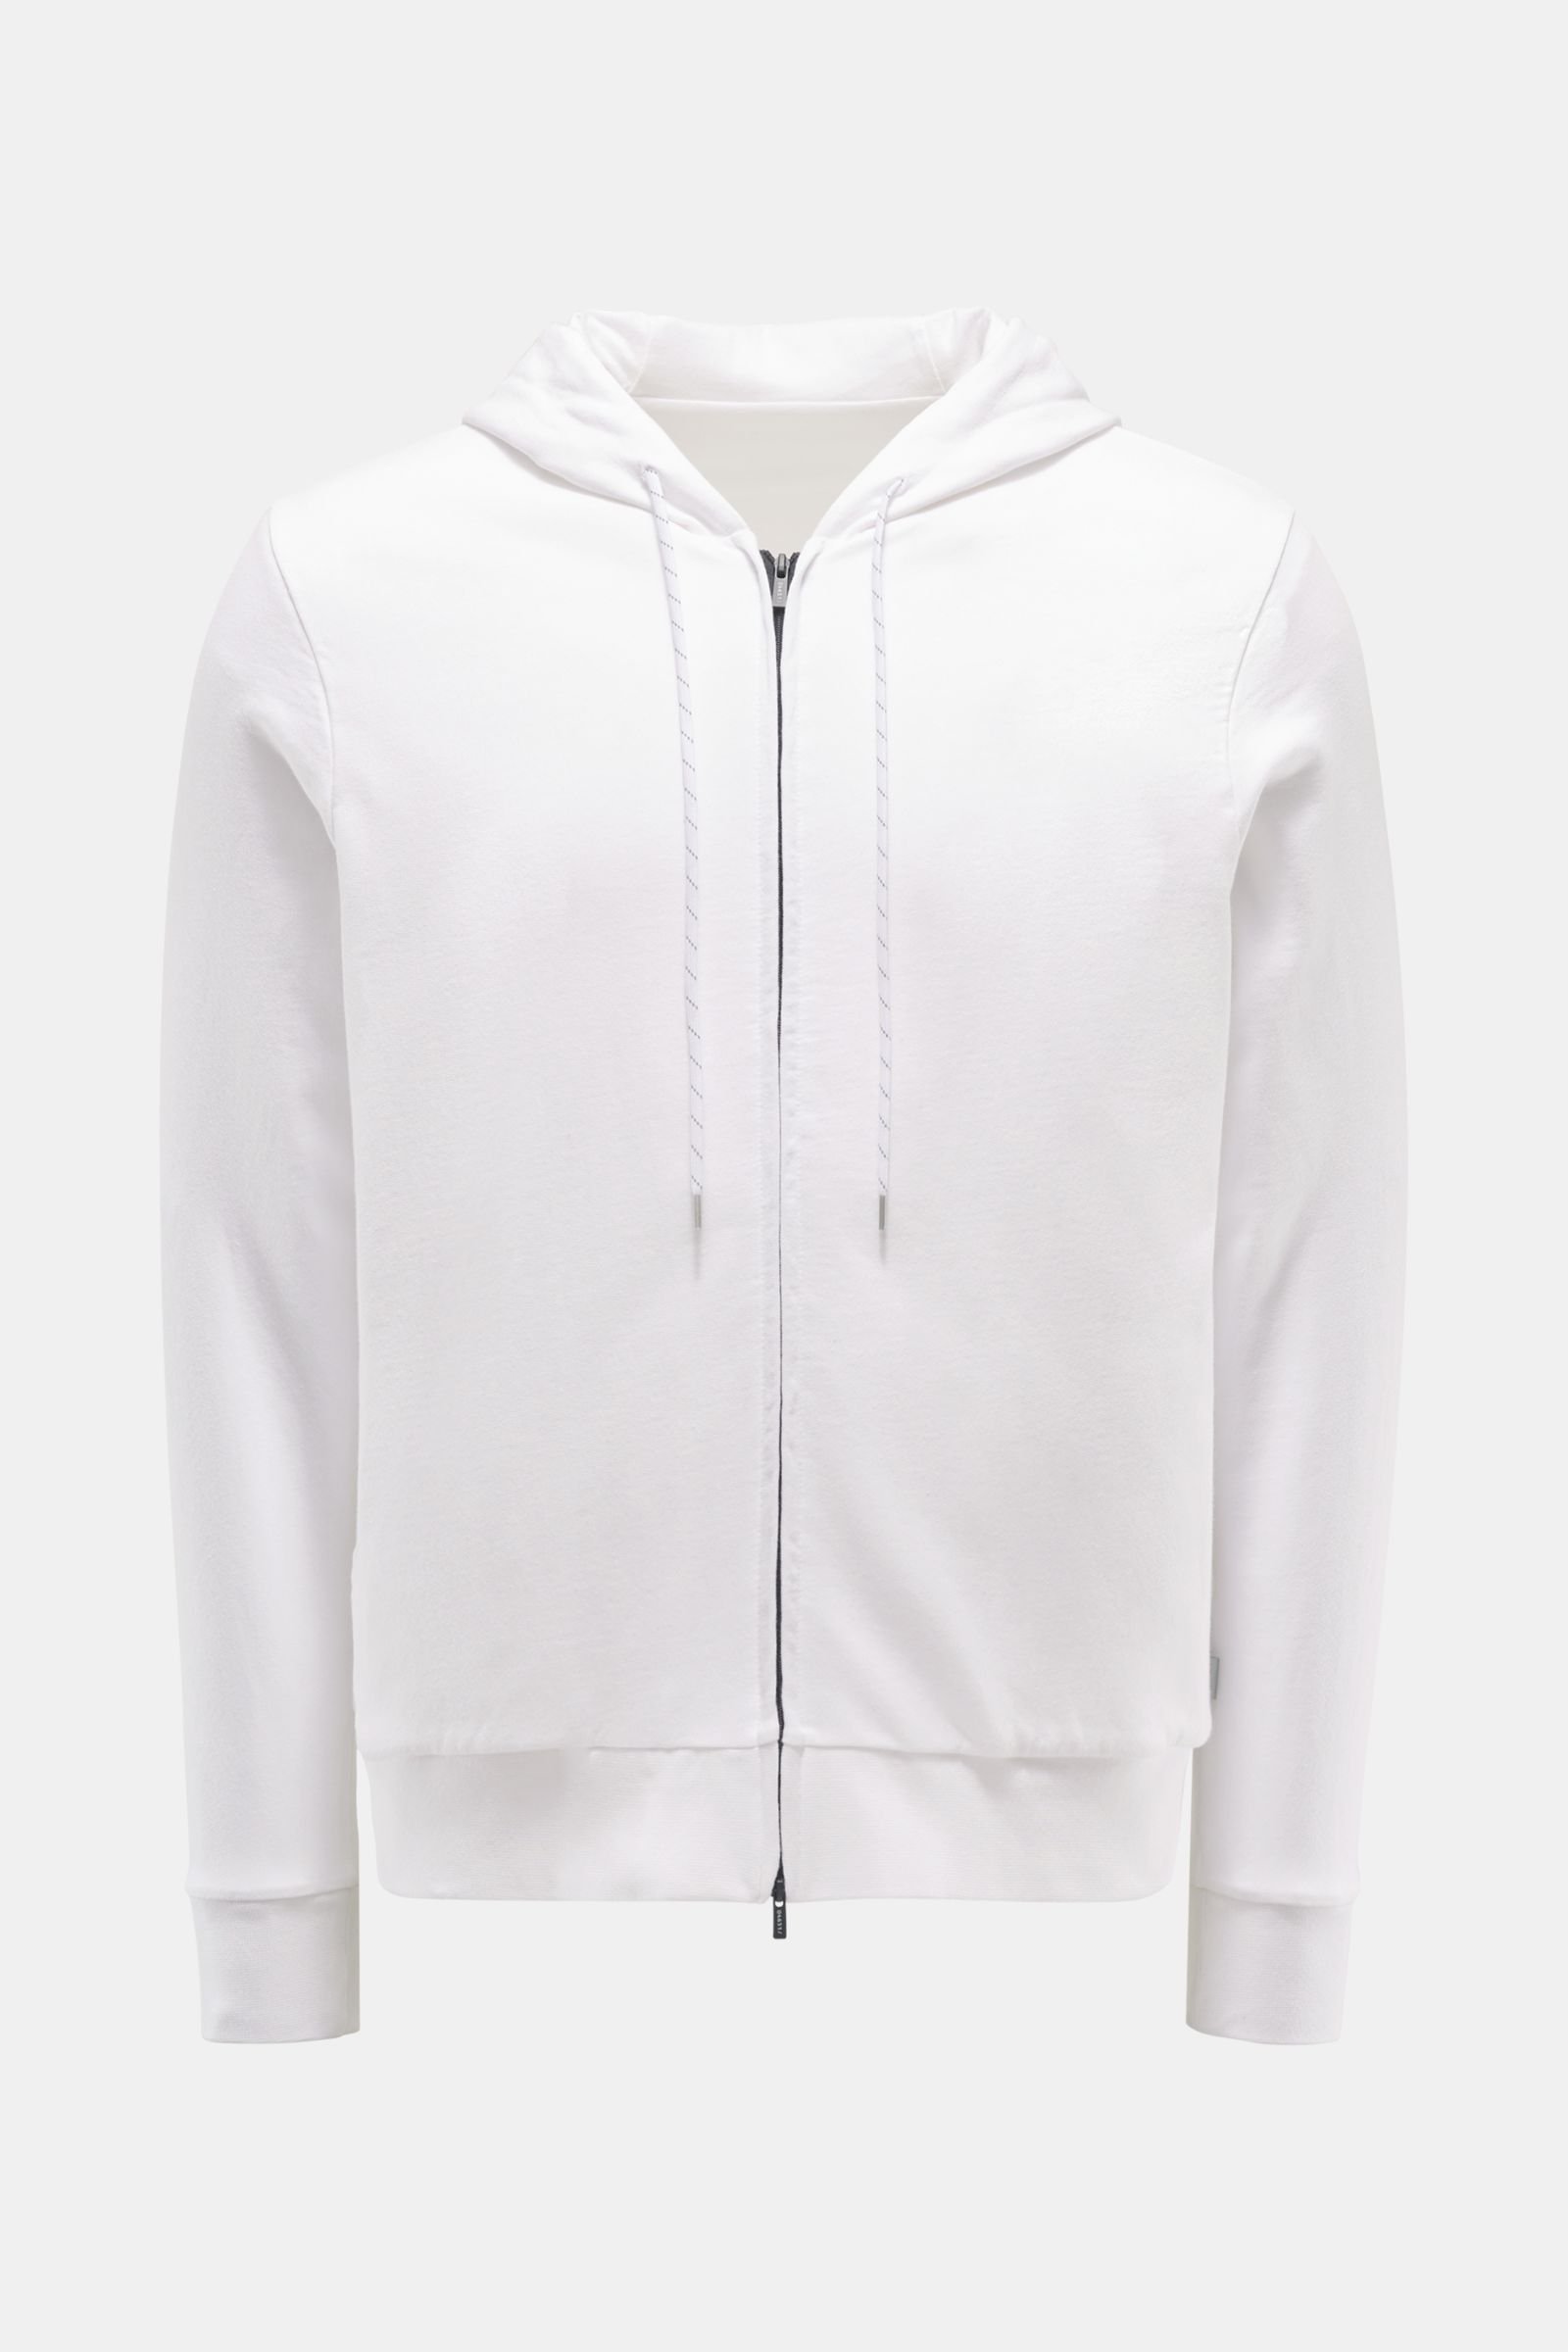 Sweat jacket white